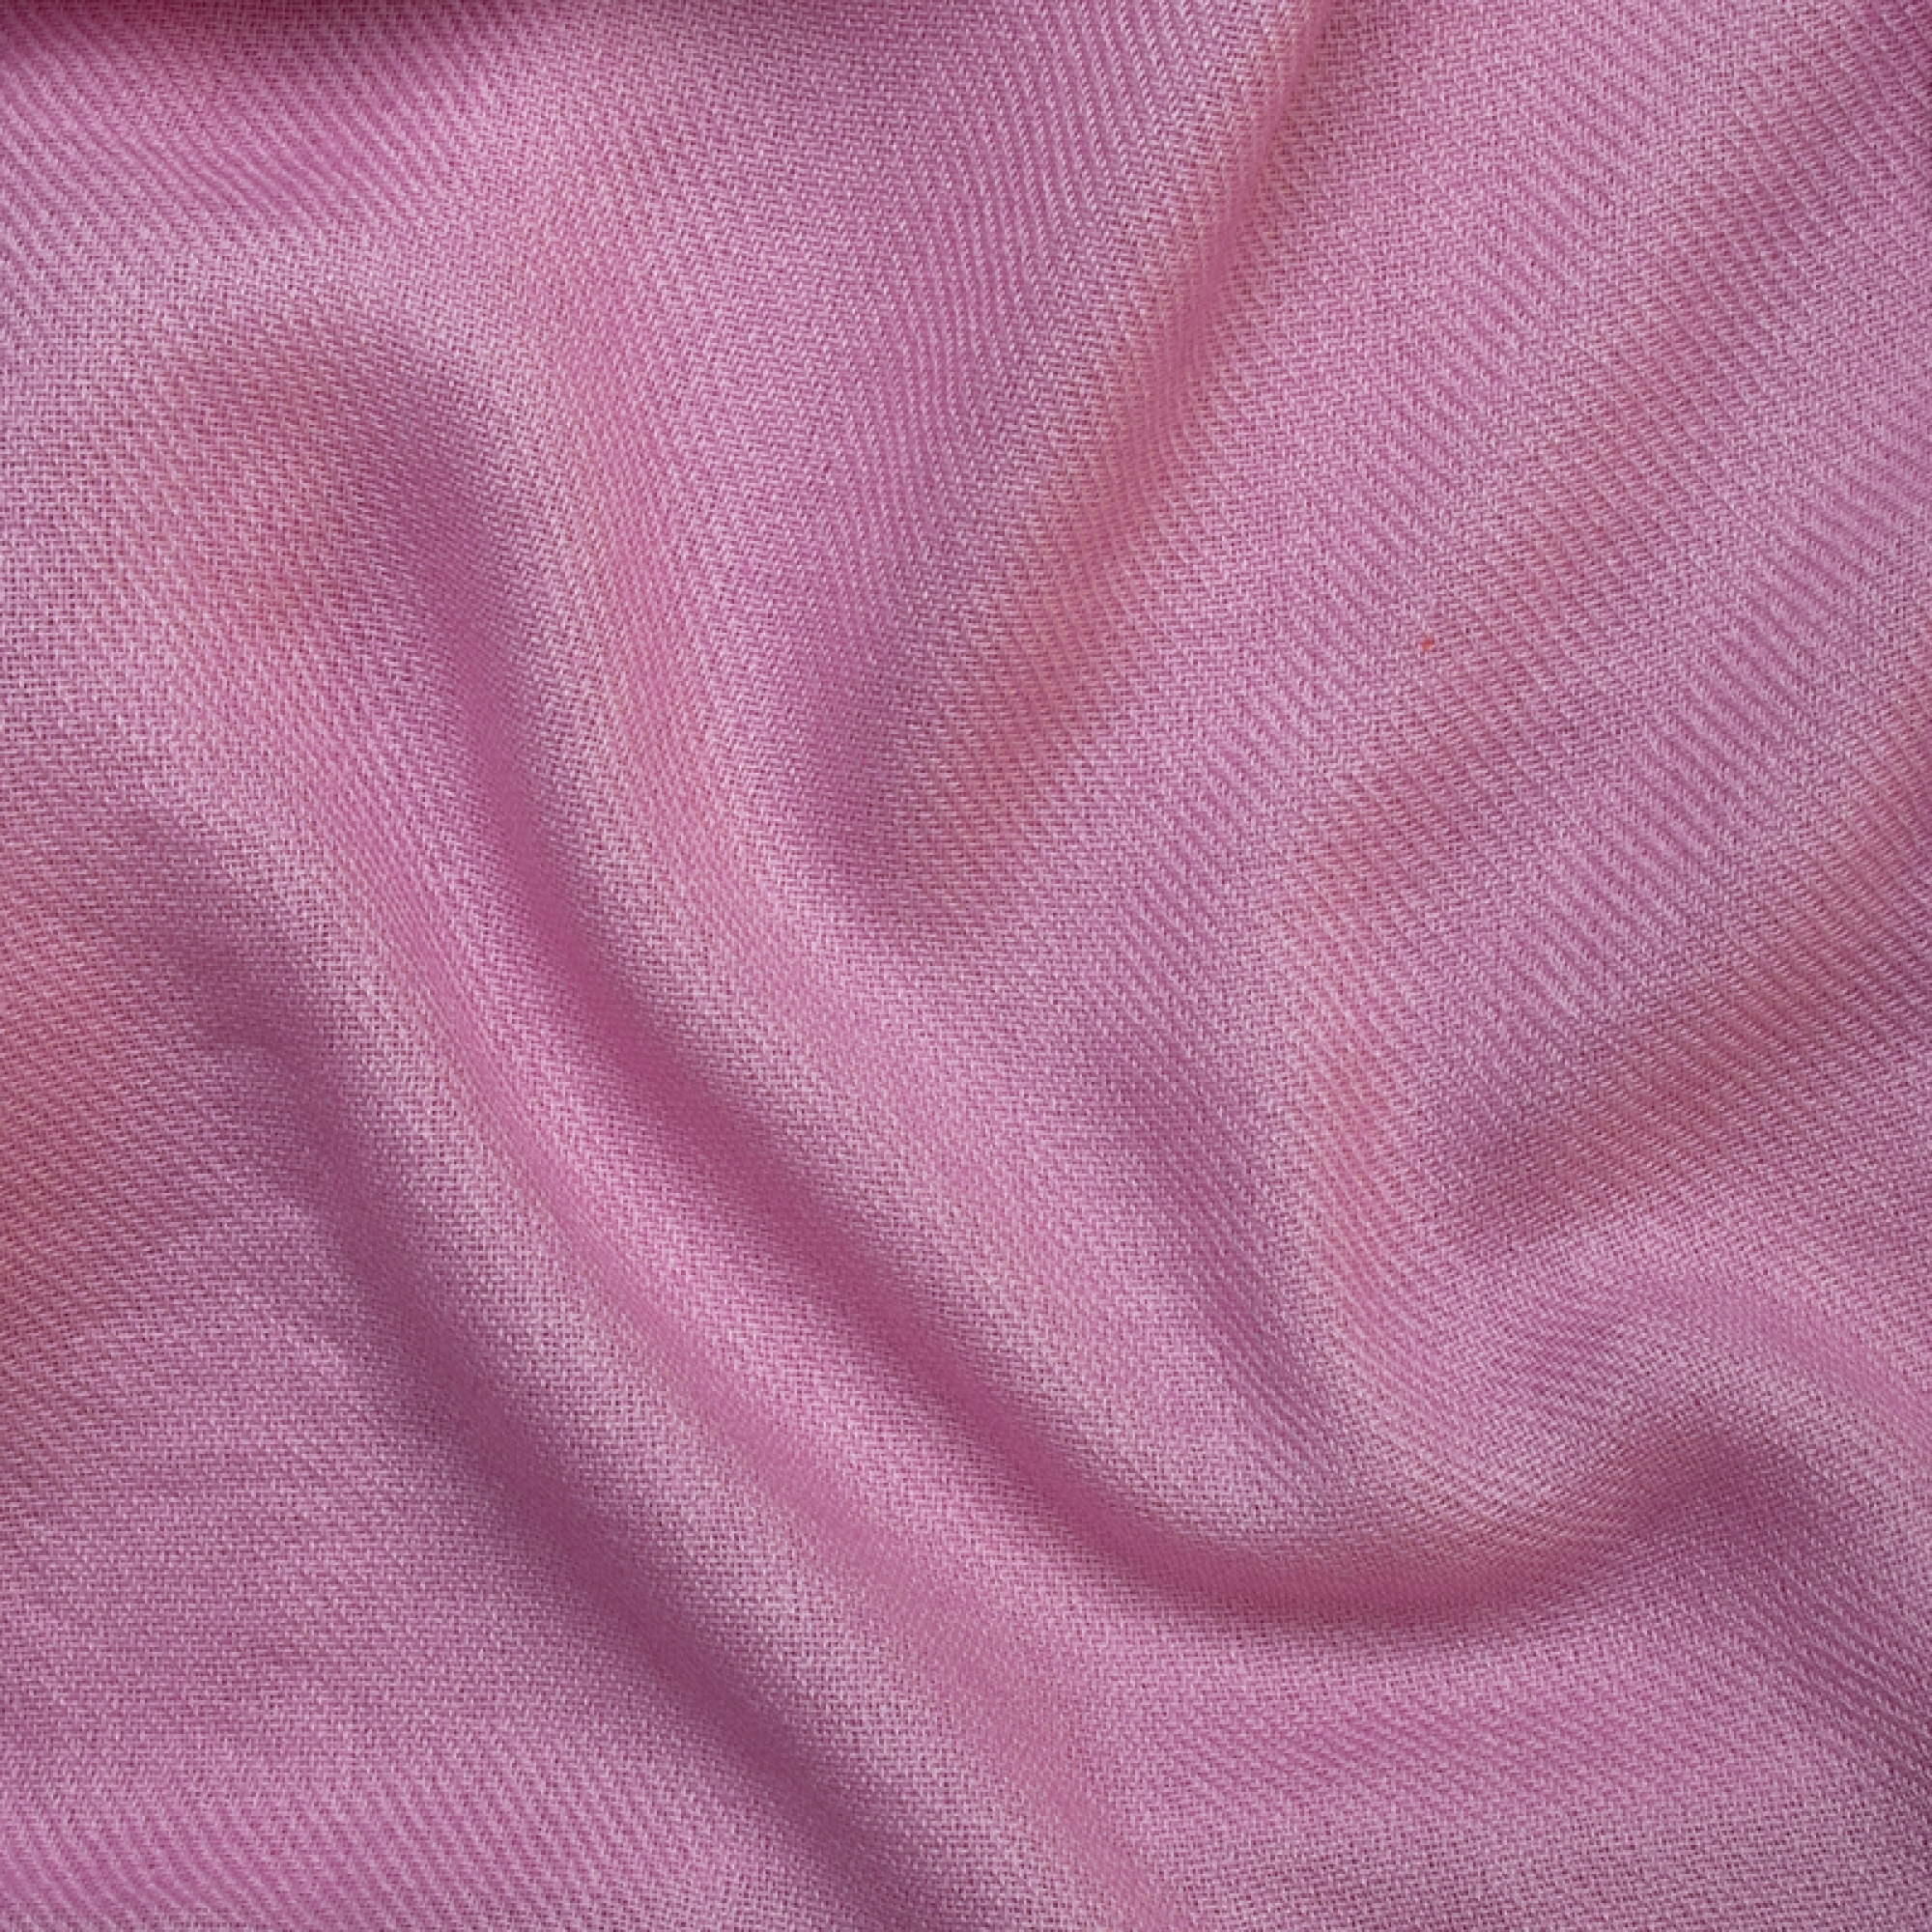 Cashmere men homewear toodoo plain l 220 x 220 pink lavender 220x220cm